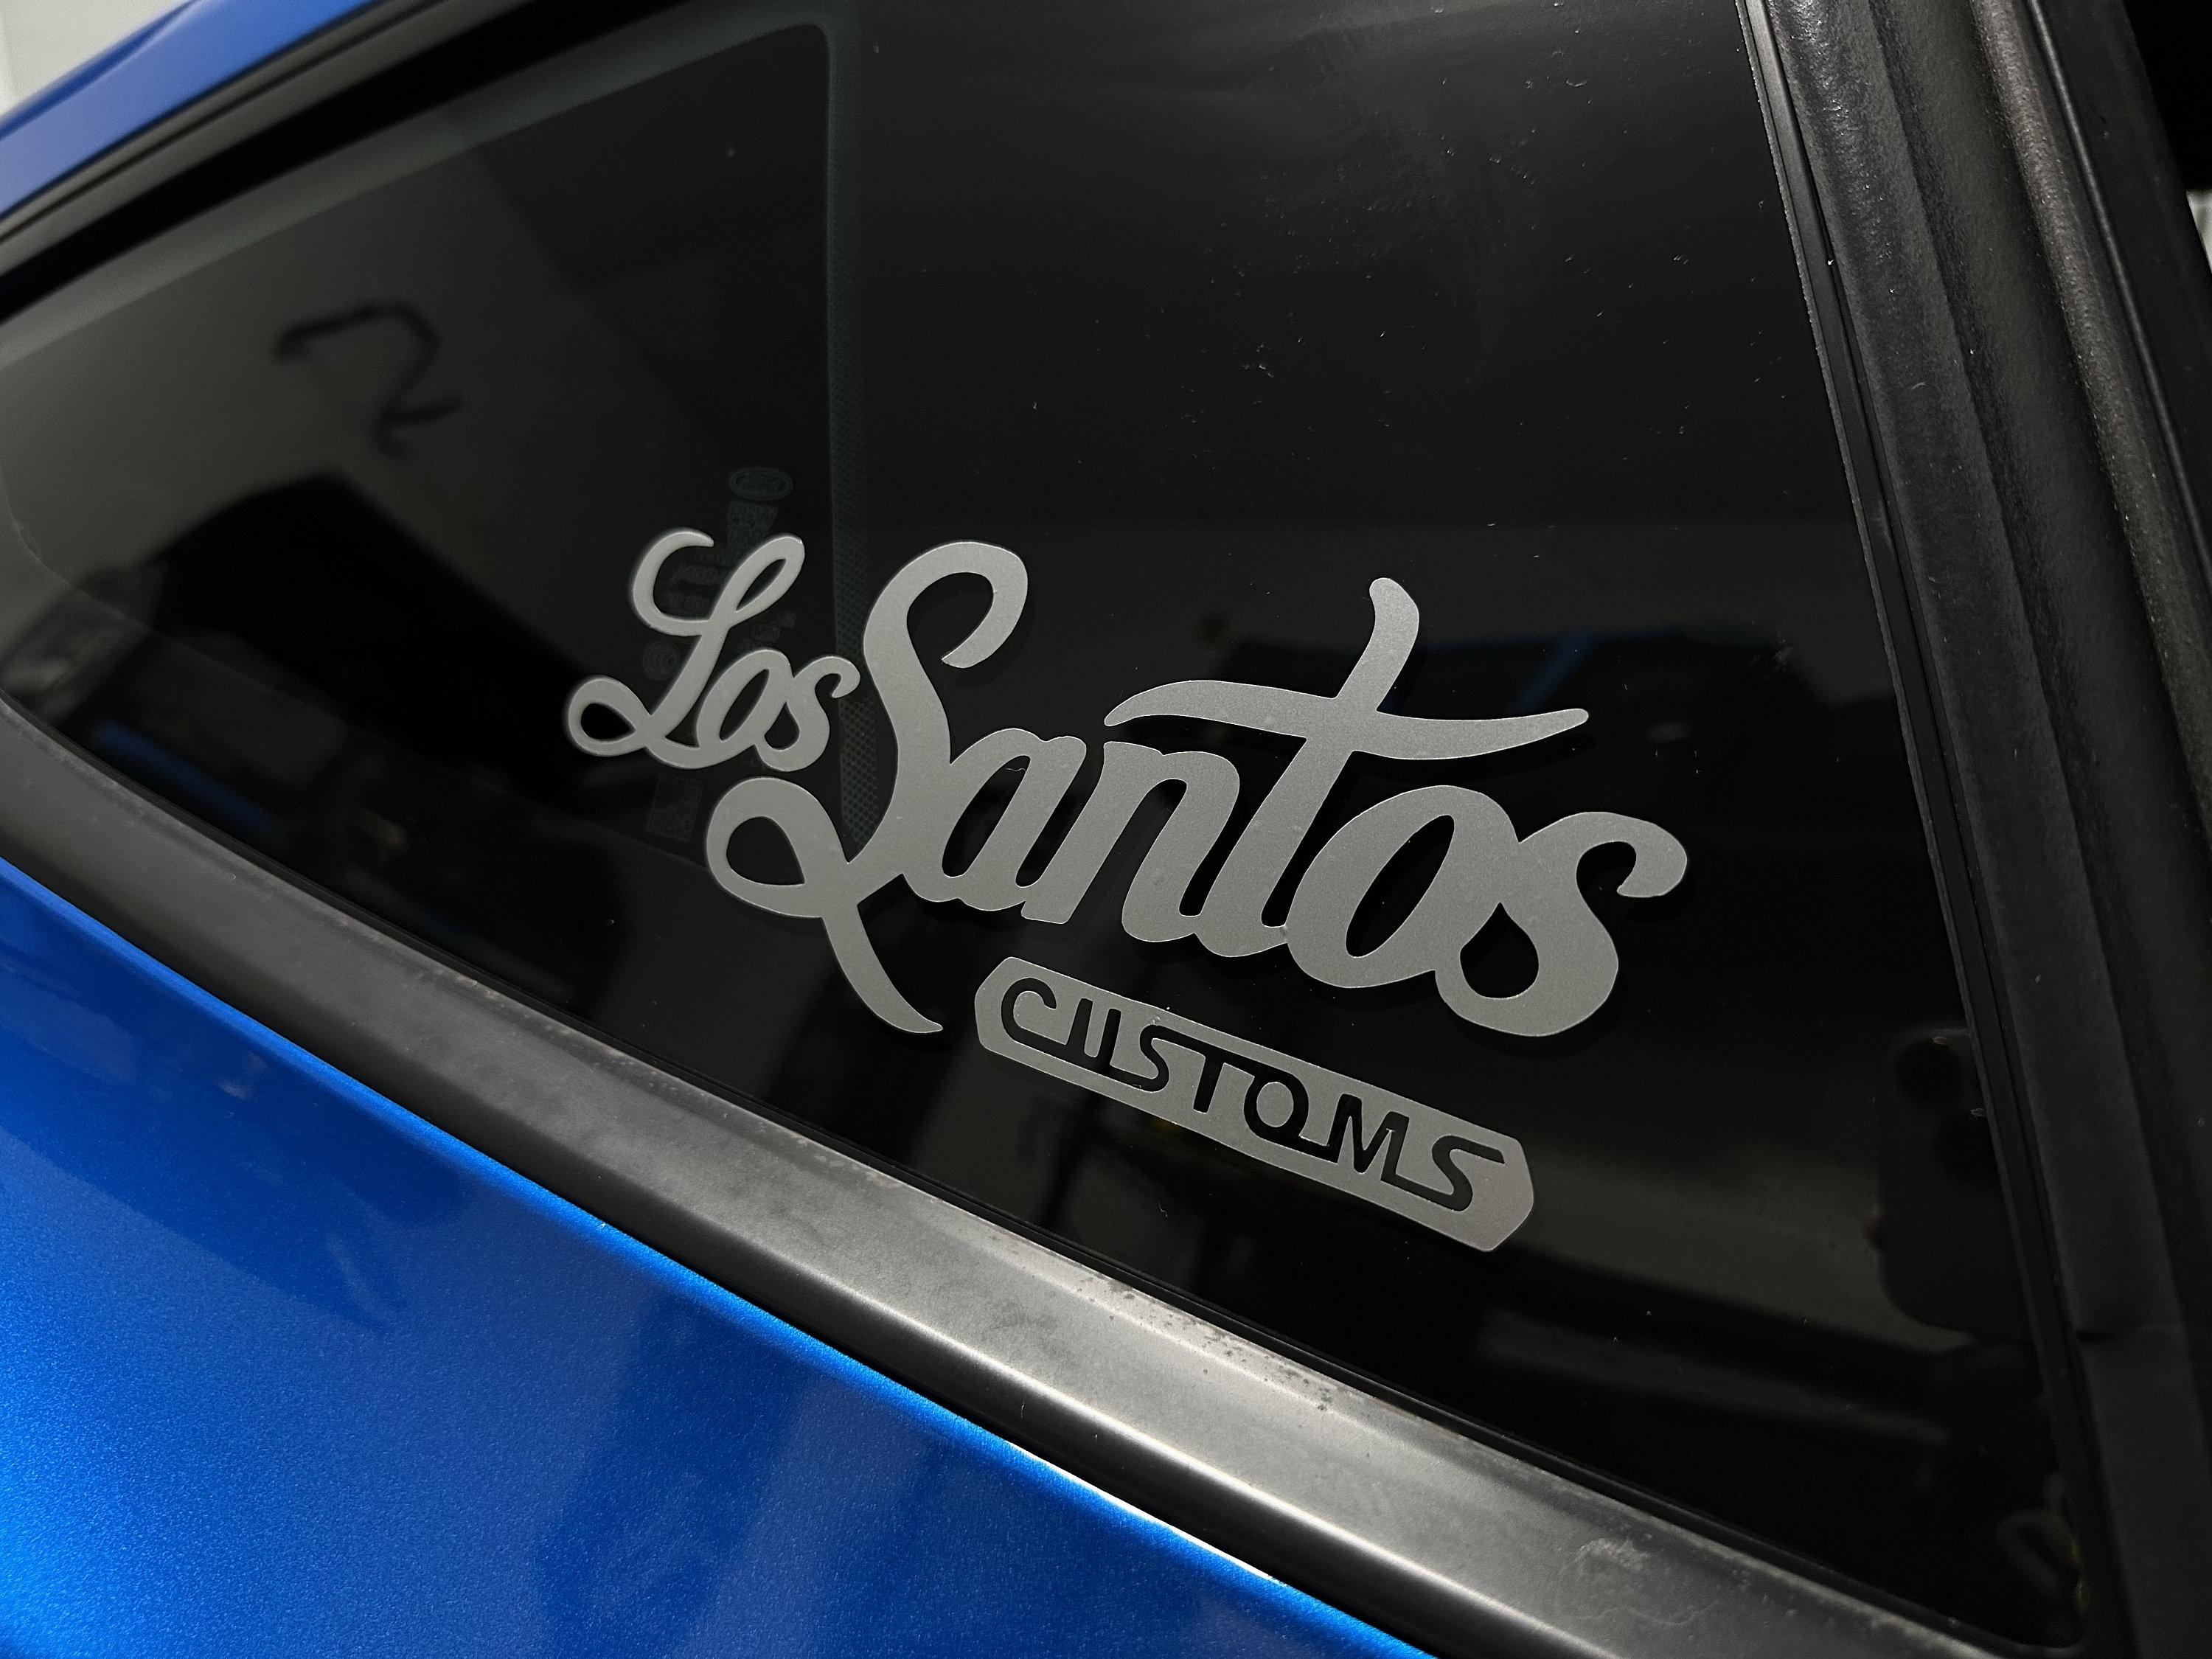 Los Santos Custom Decal(3x6) – Risky Mentality